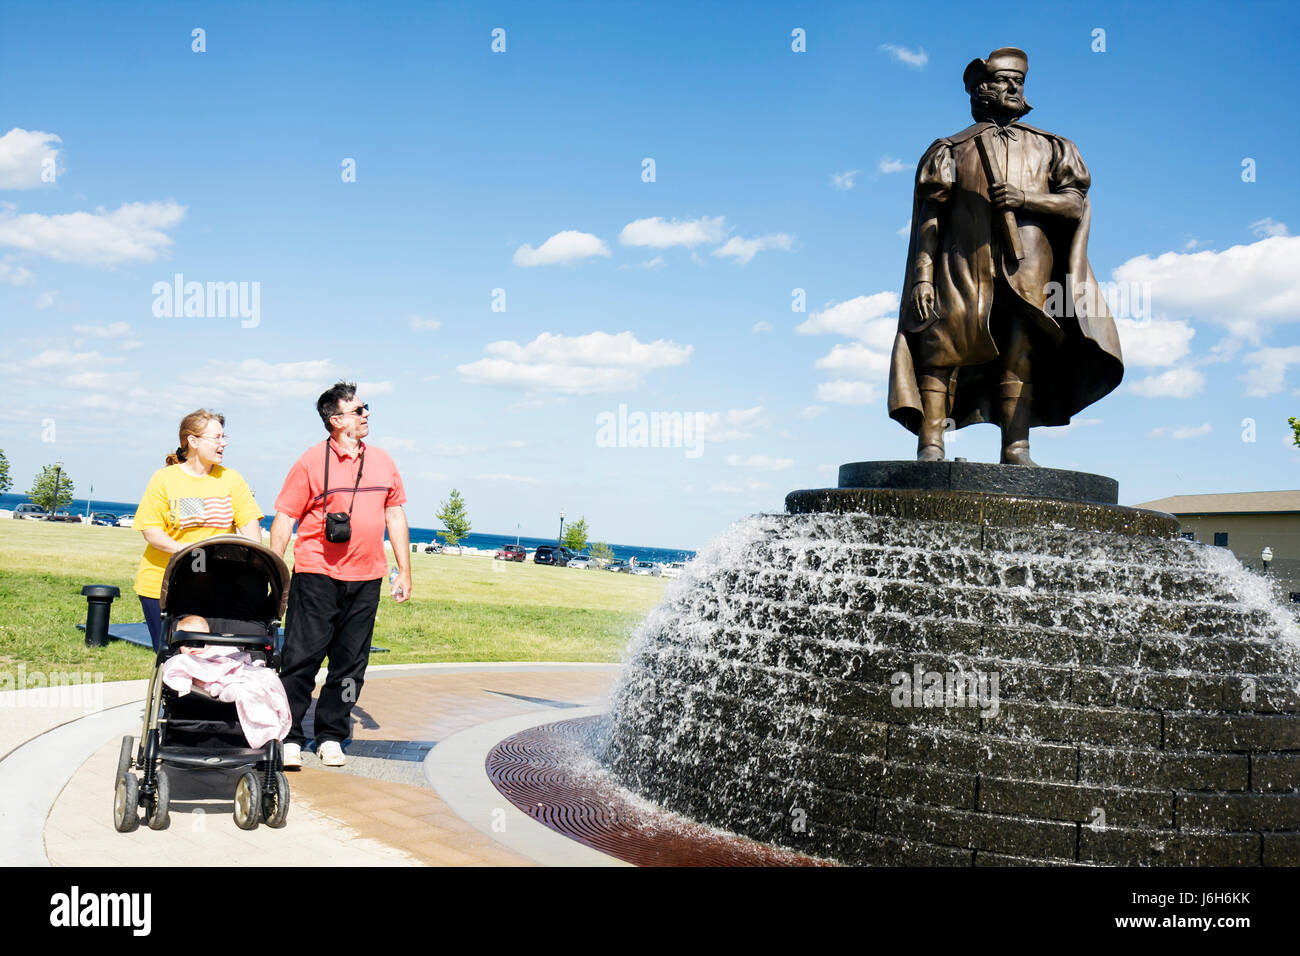 Wisconsin Kenosha County,Kenosha,Harbor Park,Christopher Columbus,statue,public fountain,man men male,woman female women,baby babies child children,fa Stock Photo